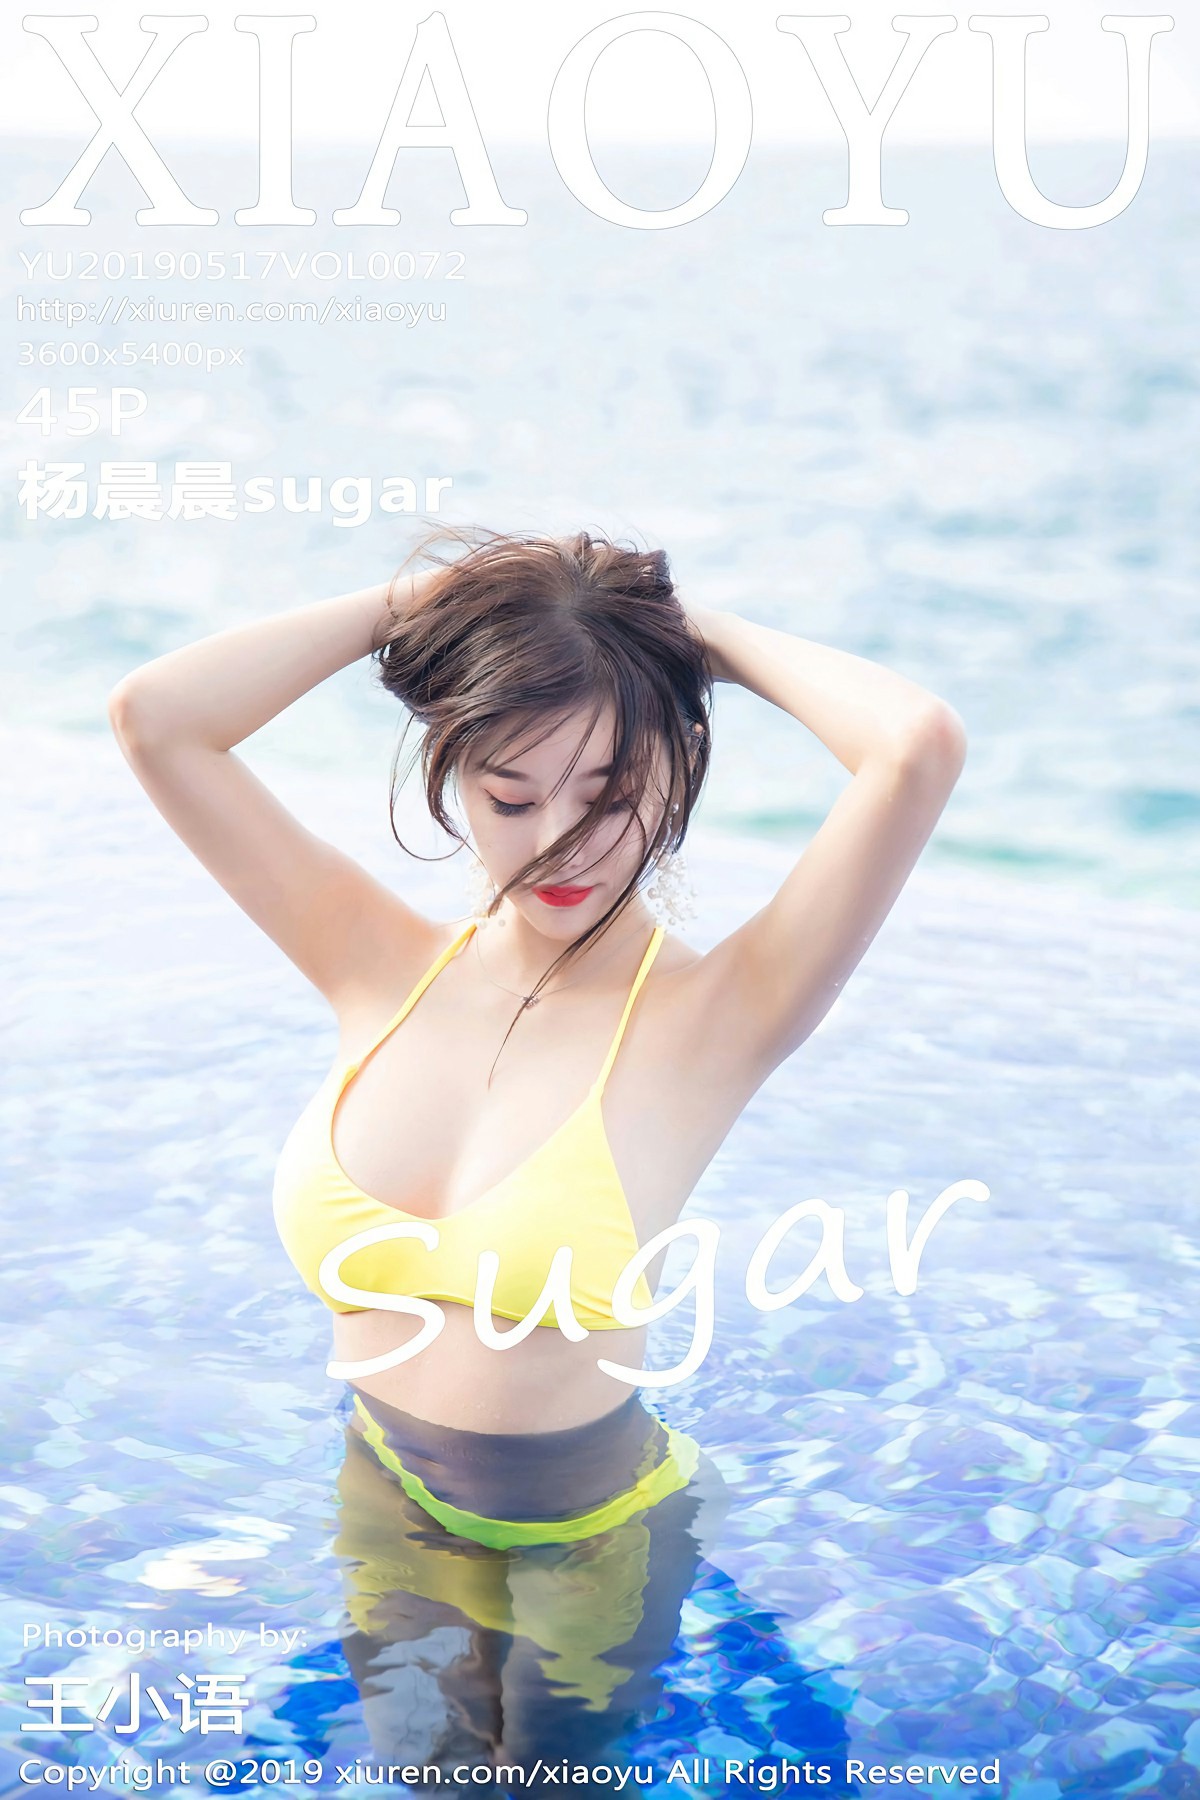 [XIAOYU语画界]2019.05.17 VOL.072 <strong>杨晨晨sugar</strong>